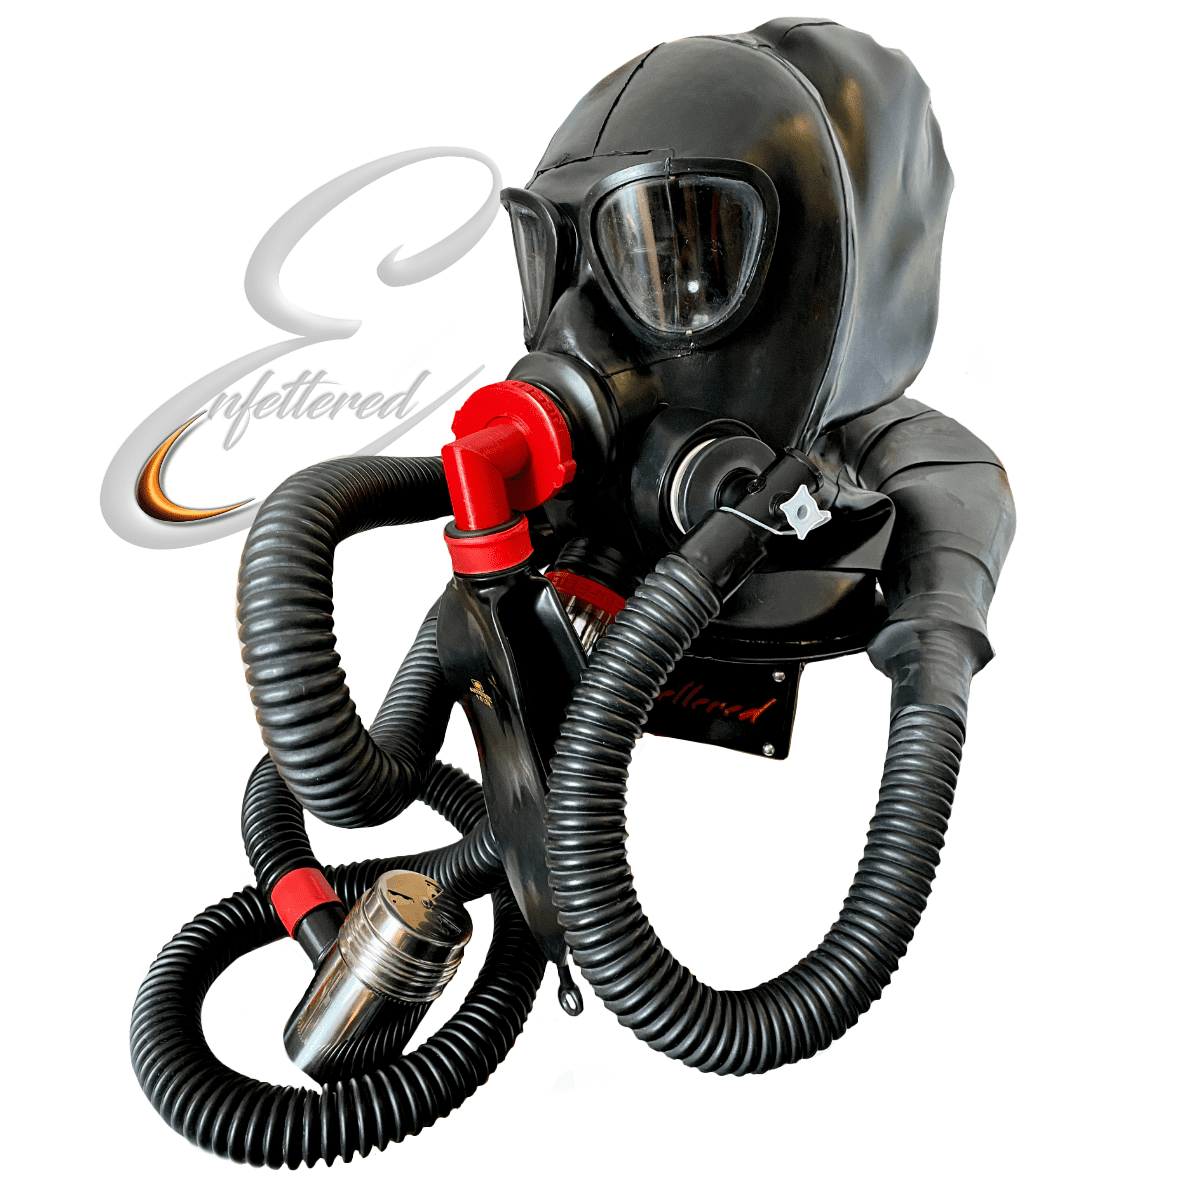 Enfettered Gas Mask Hood with Split Tube Smell Bag Aroma System